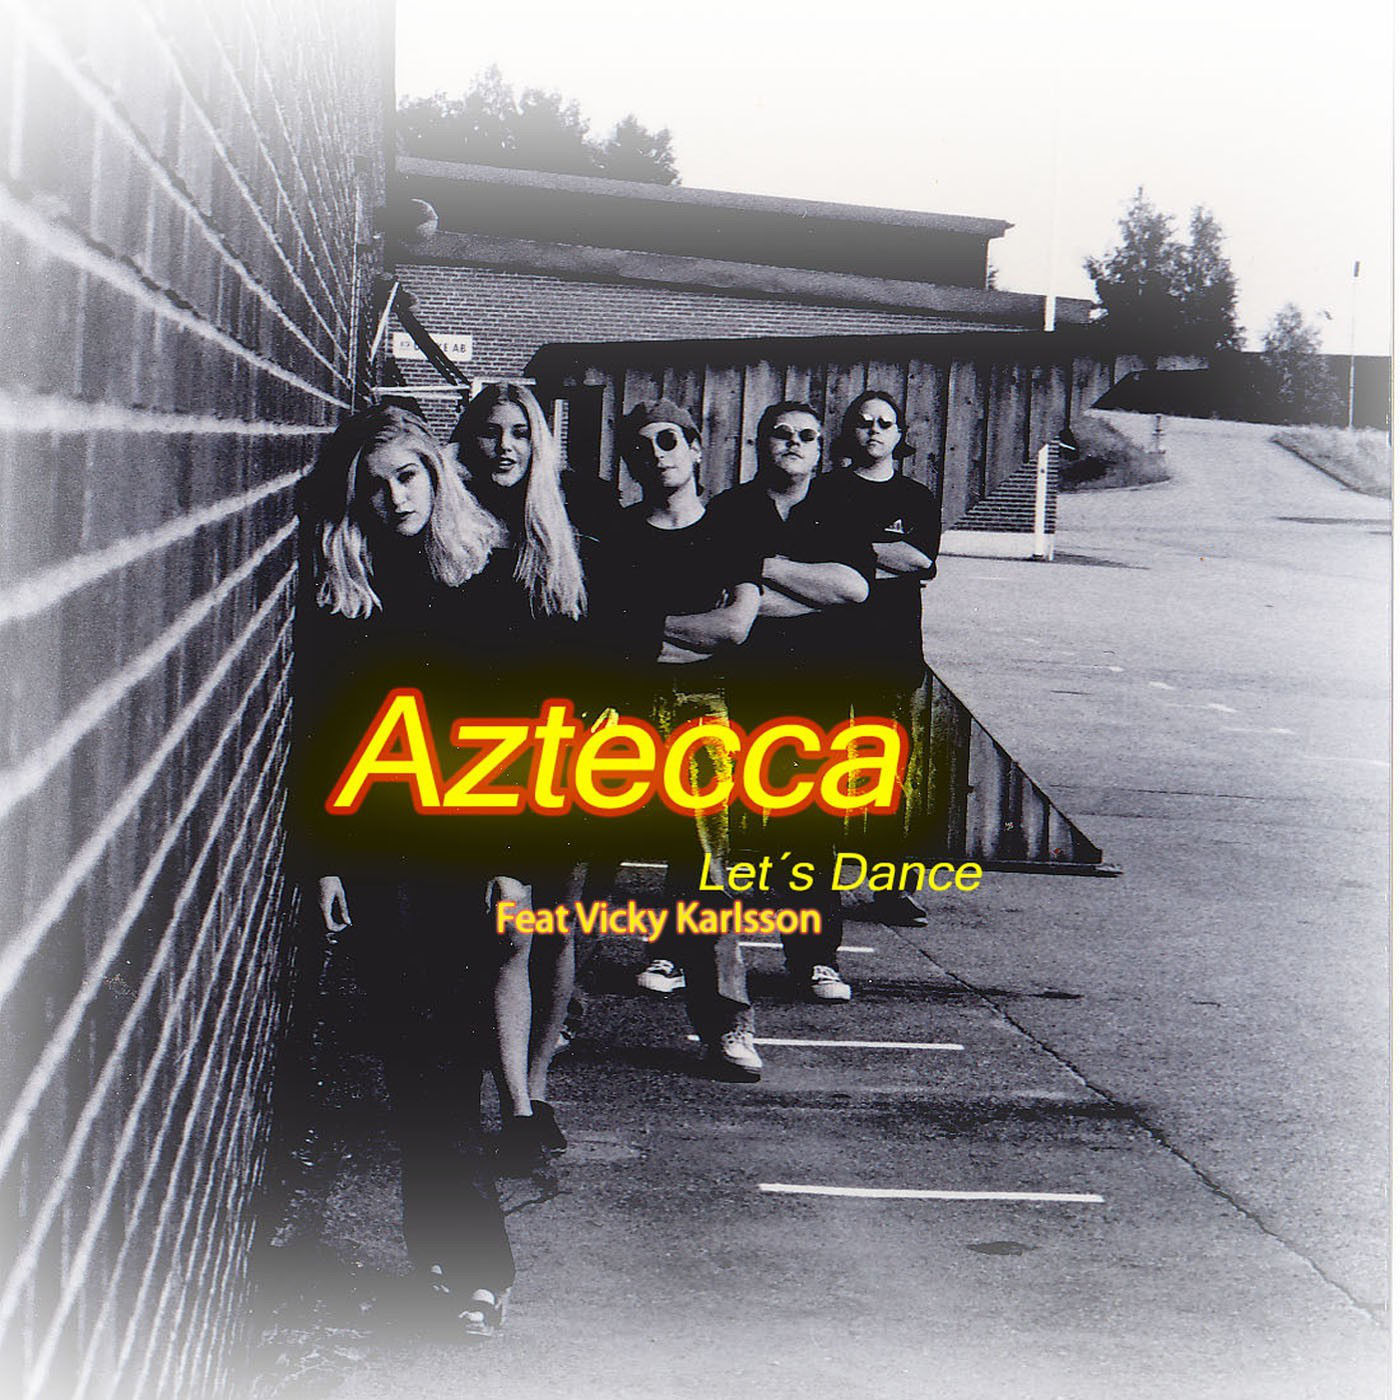 Aztecca - Let's Dance